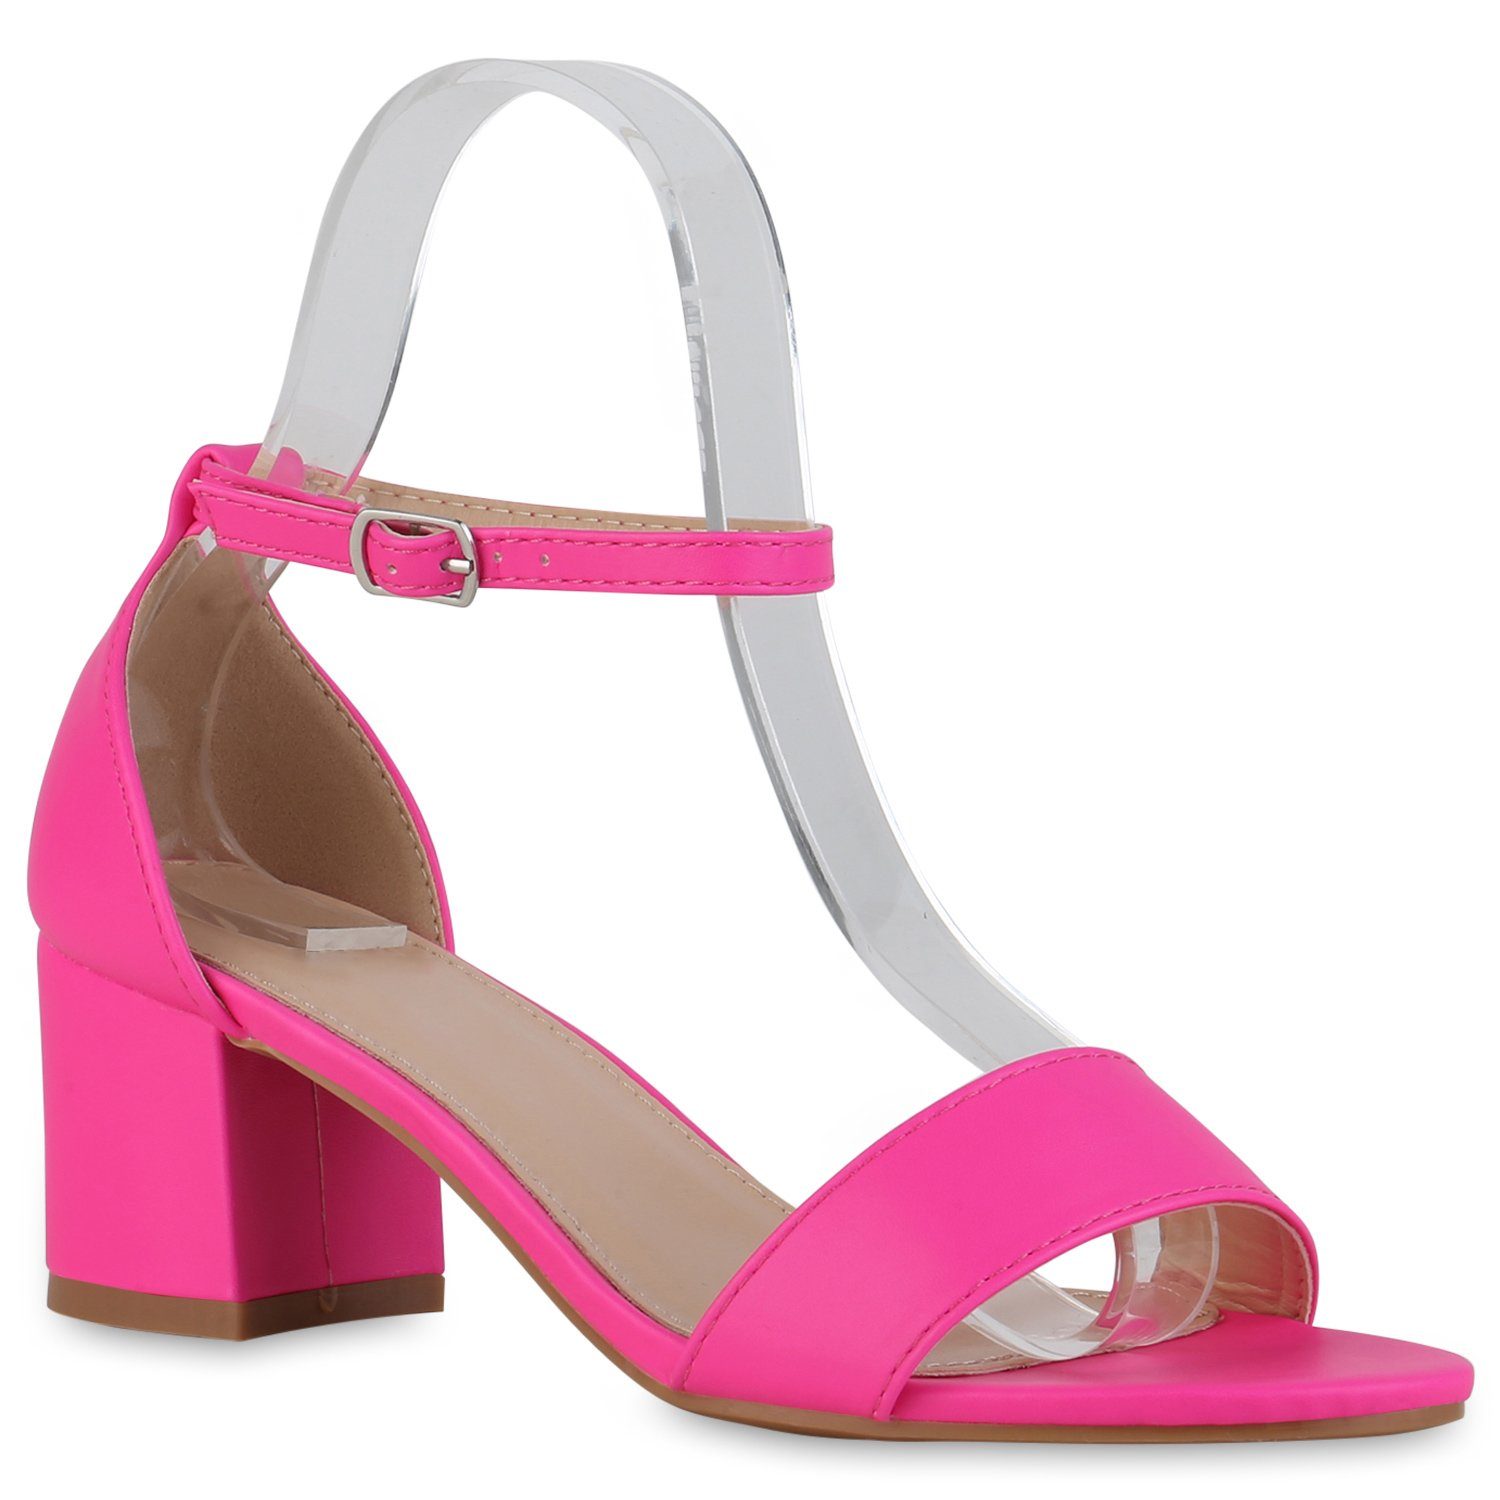 VAN HILL 838359 Riemchensandalette Schuhe Neon Pink